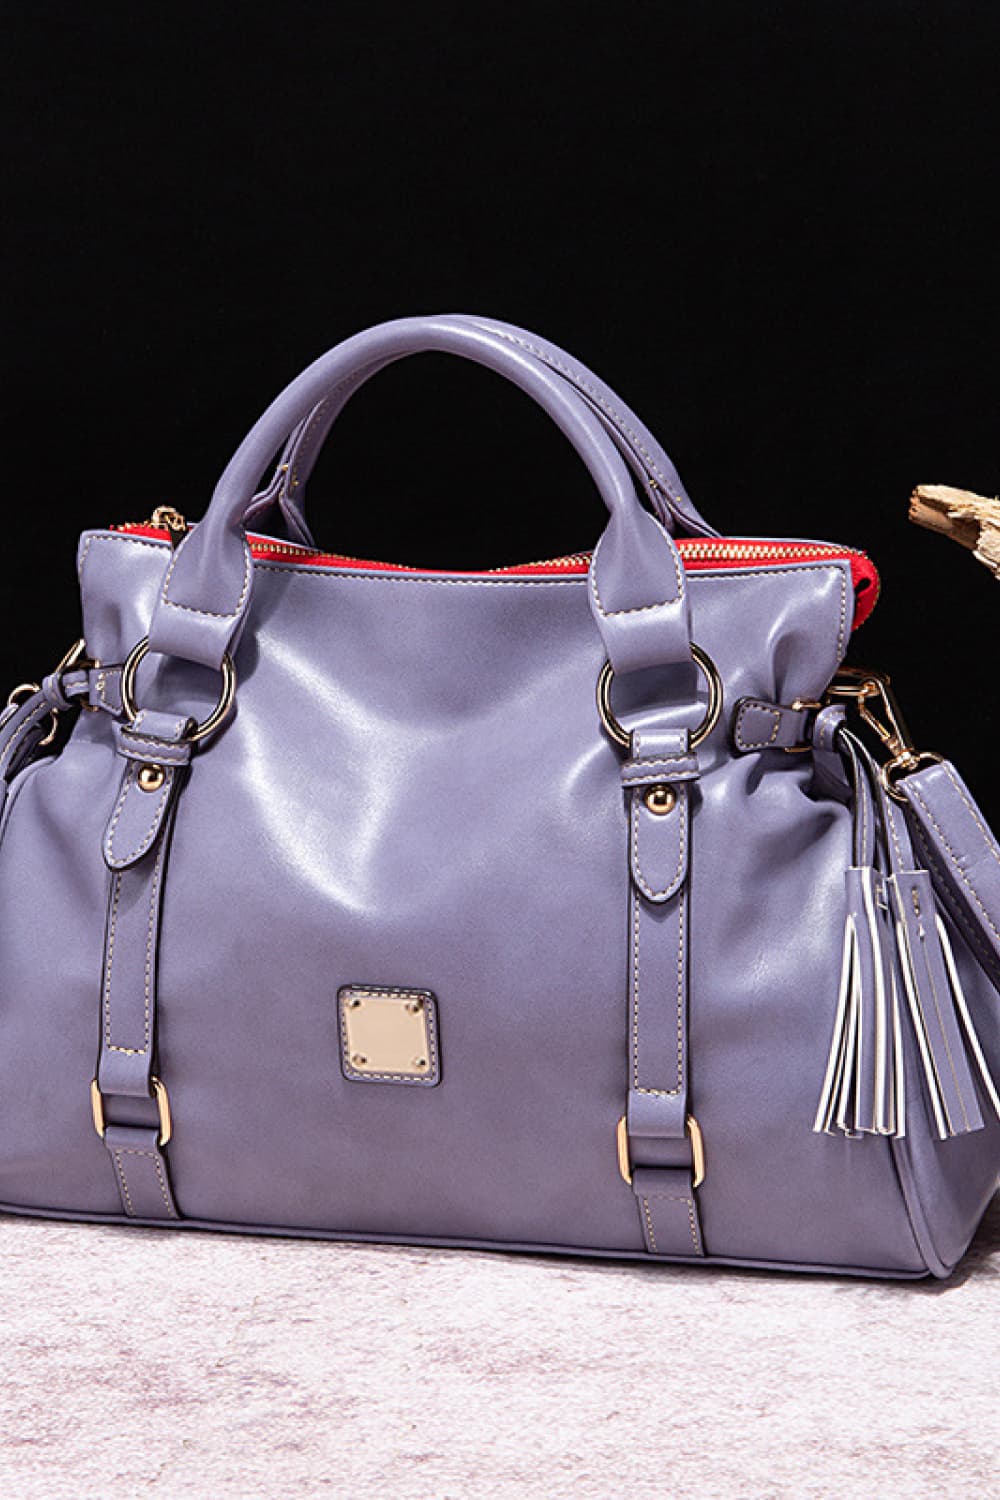 PU Leather Handbag with Tassels - House of Binx 